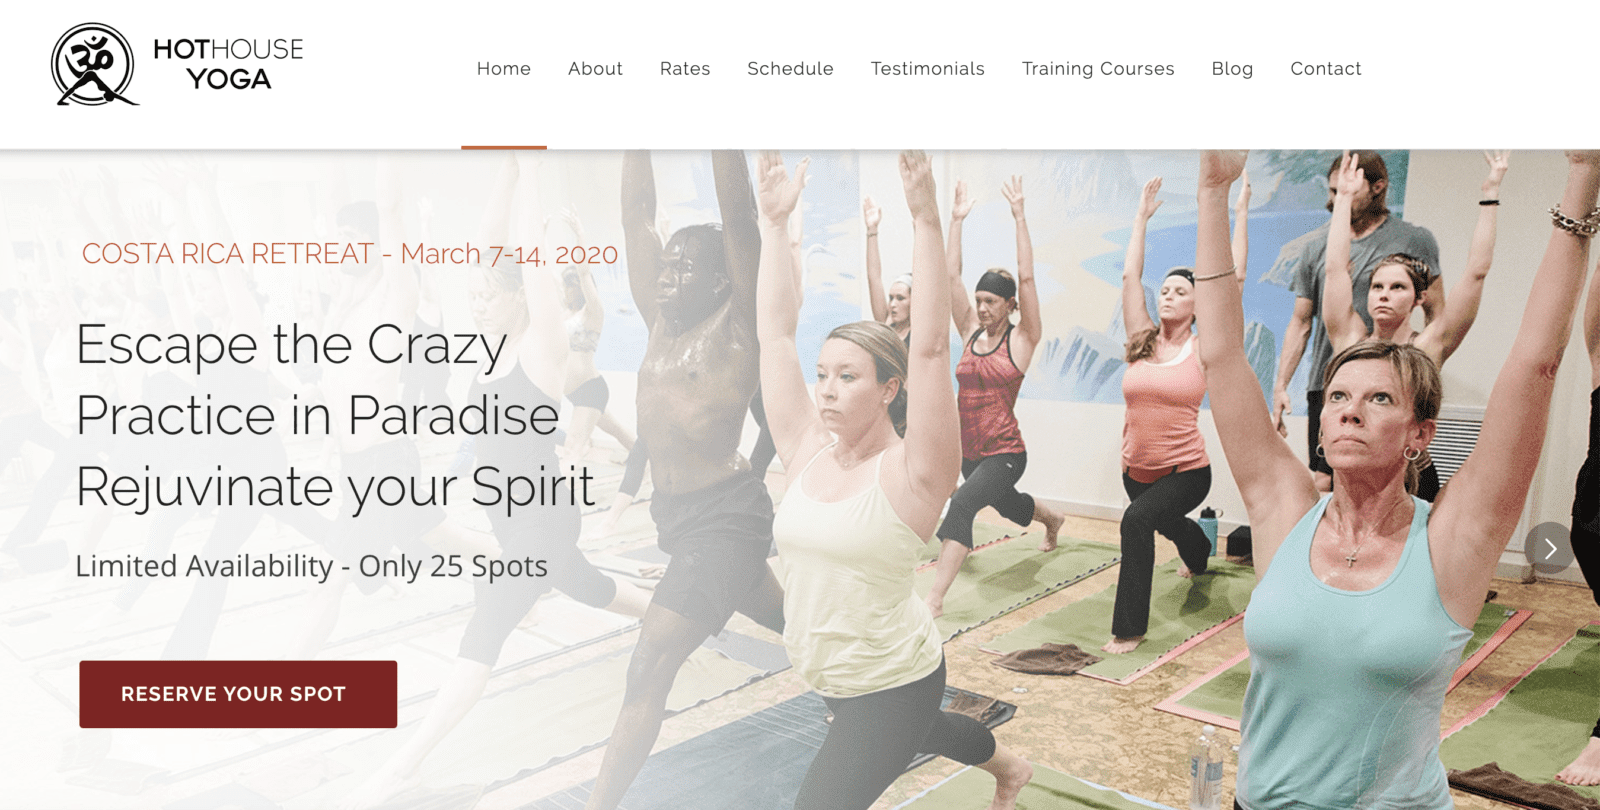 hot house yoga website 